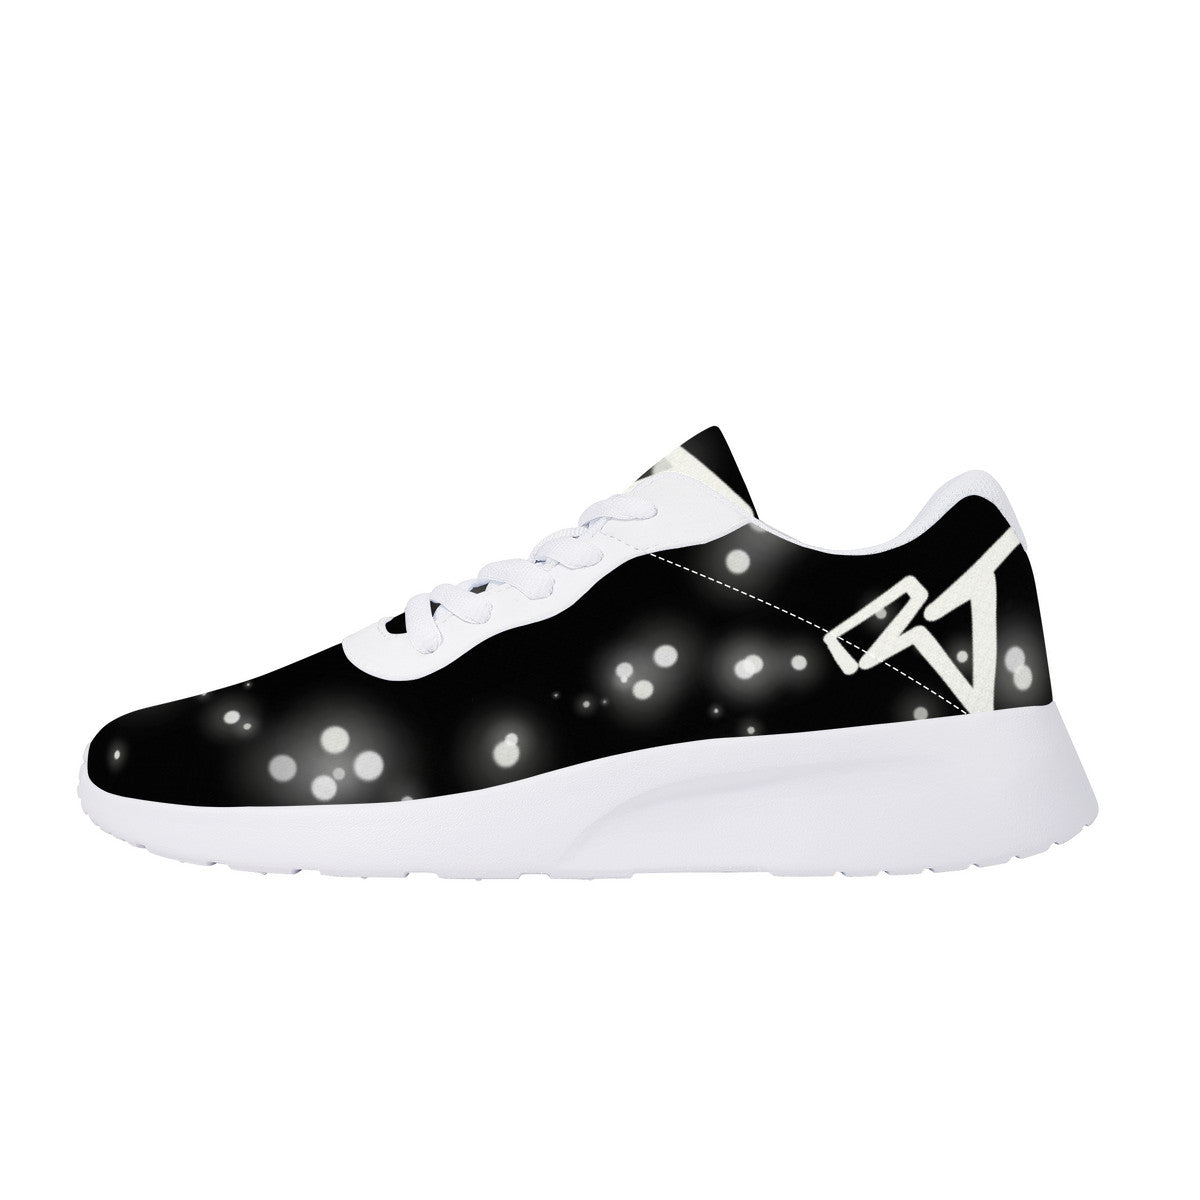 Air Mesh Running Shoes - Star Bright